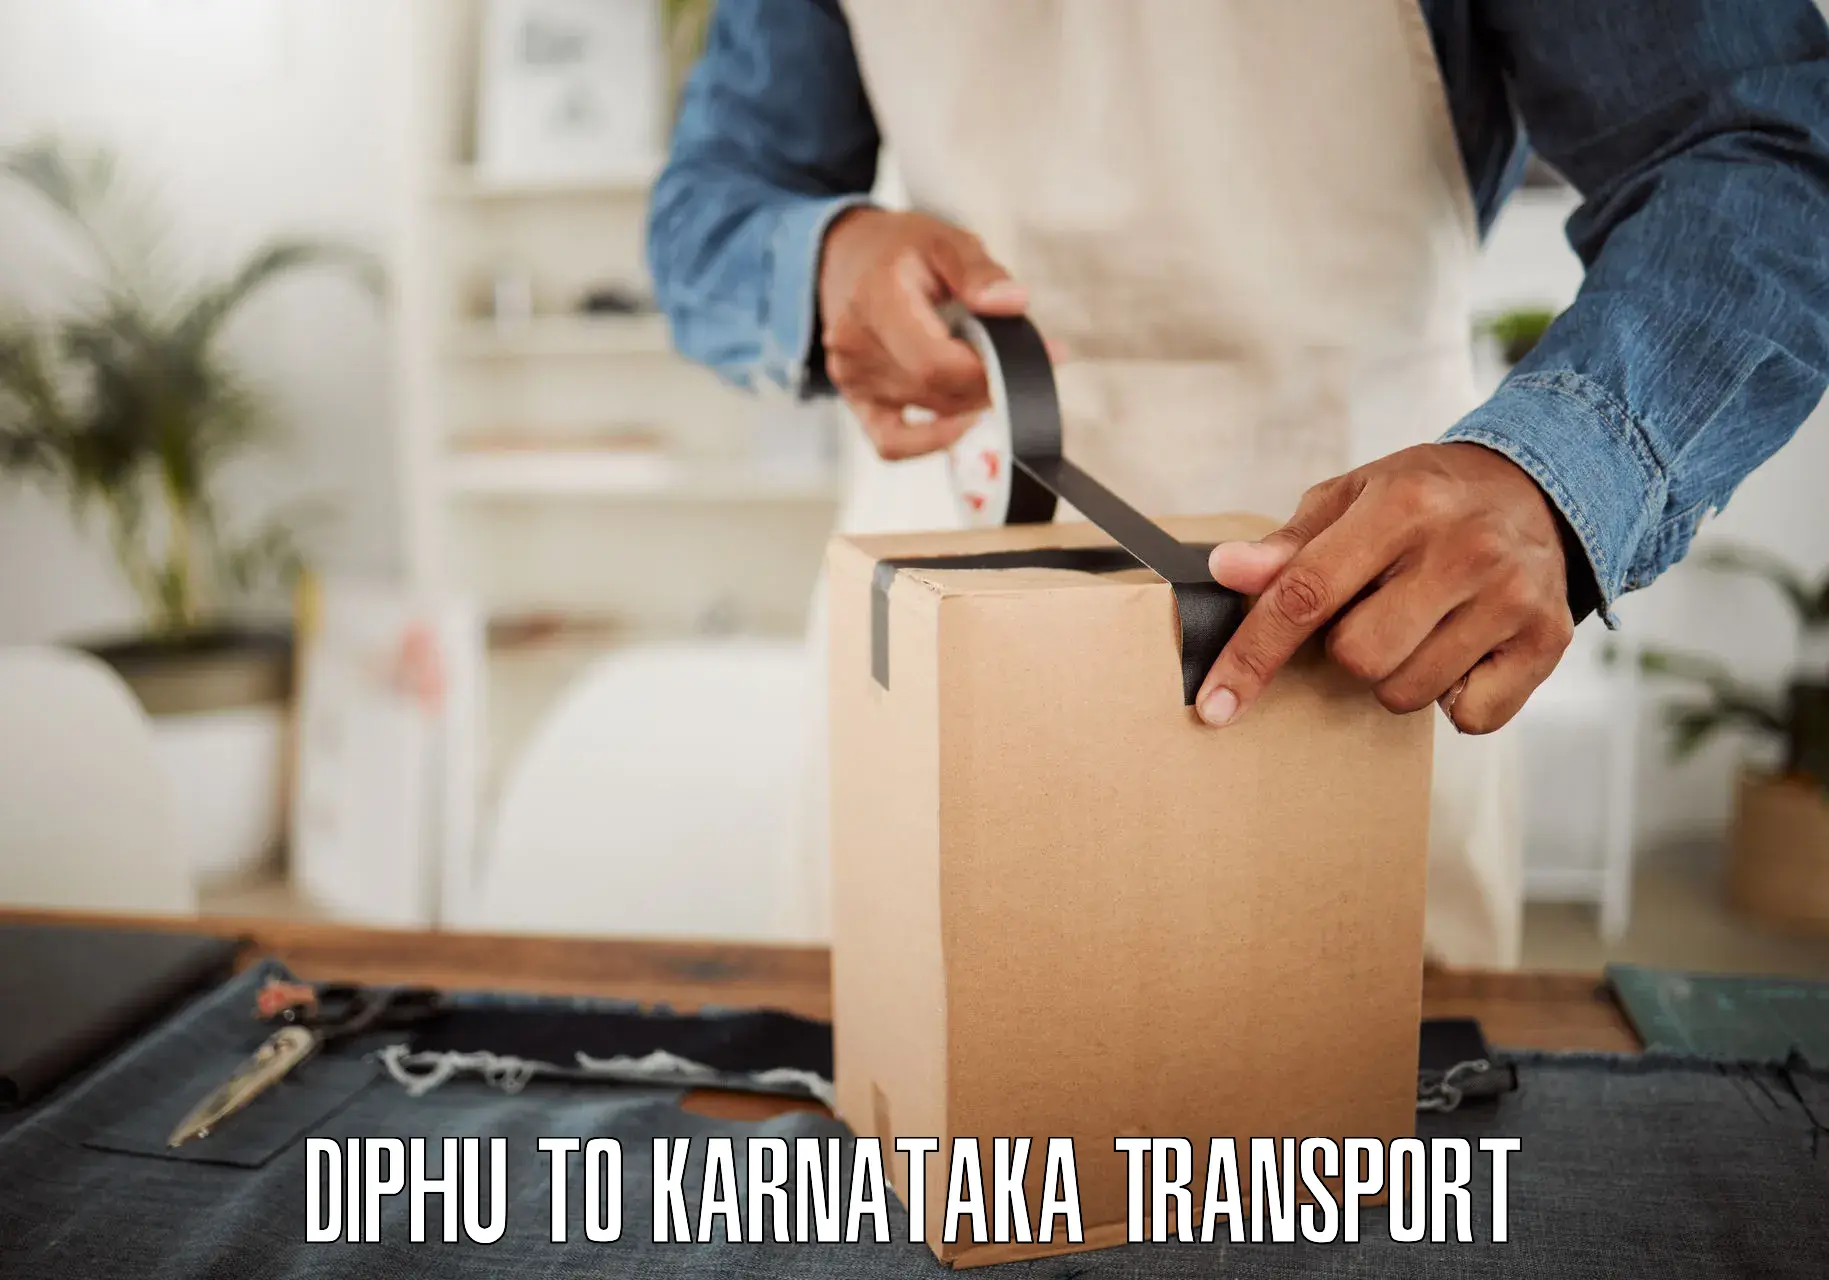 Furniture transport service Diphu to Manipal